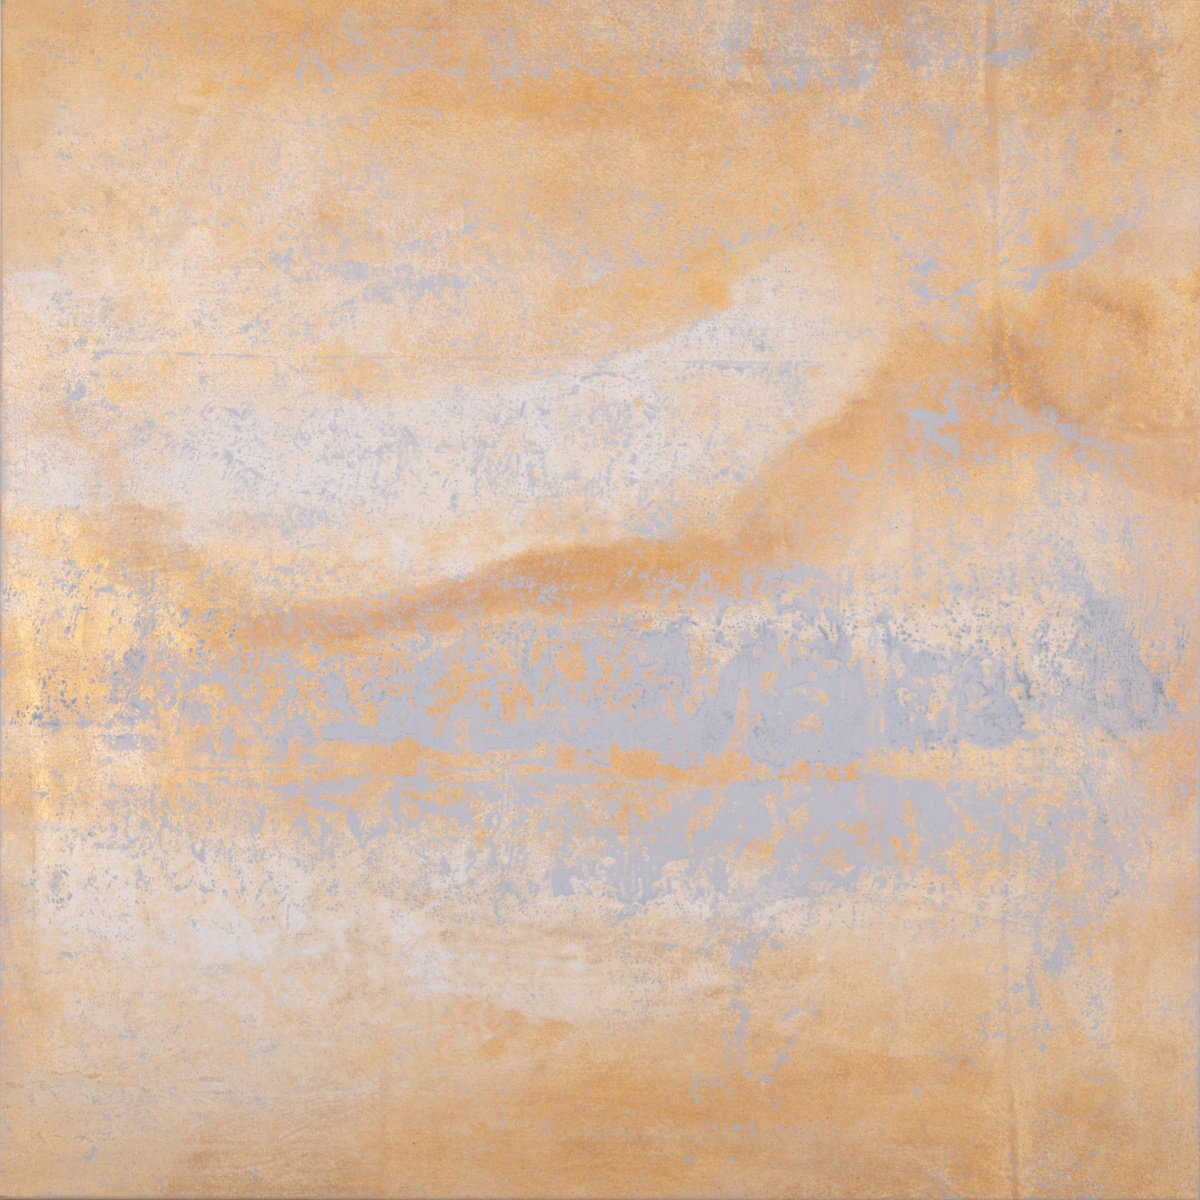 No. 22-11 (120 x 120 cm ) by Rokas Berziunas